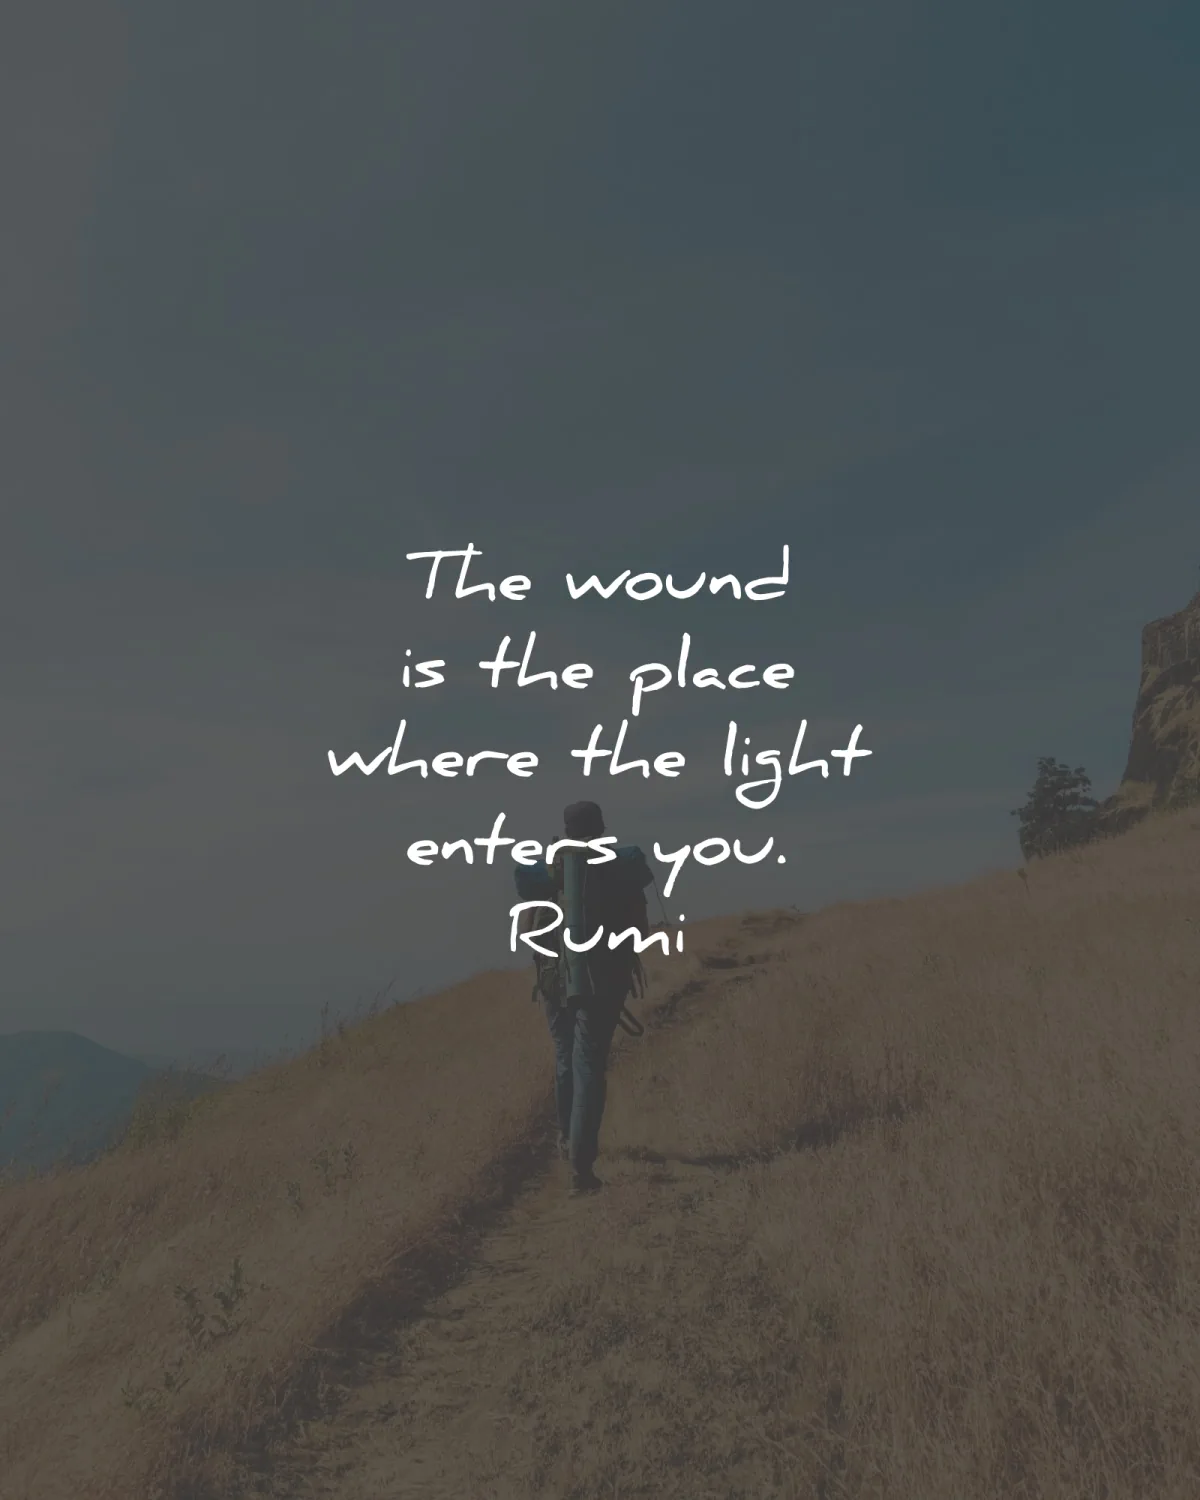 sad quotes wound place light enters you rumi wisdom